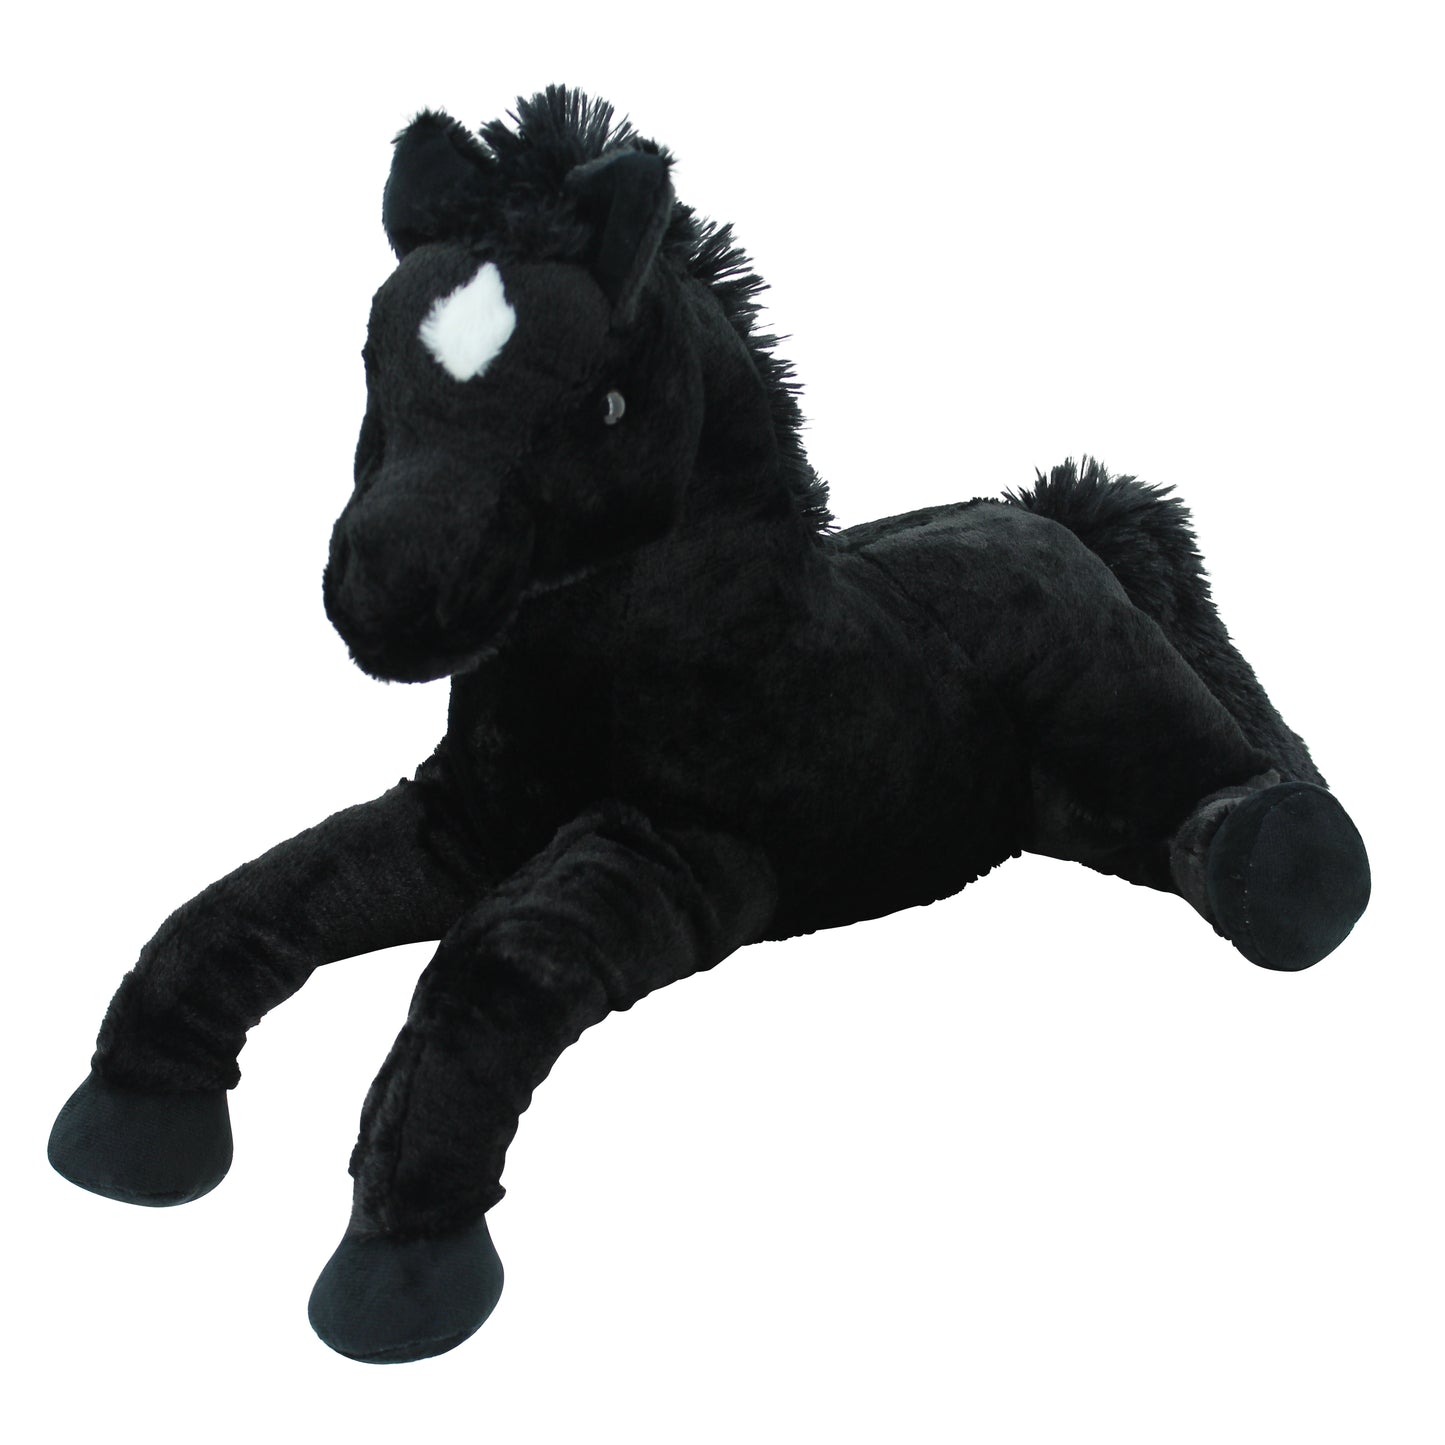 Sweety Toys 5185 Cuddly horse foal black foal cuddly soft plush horse lying